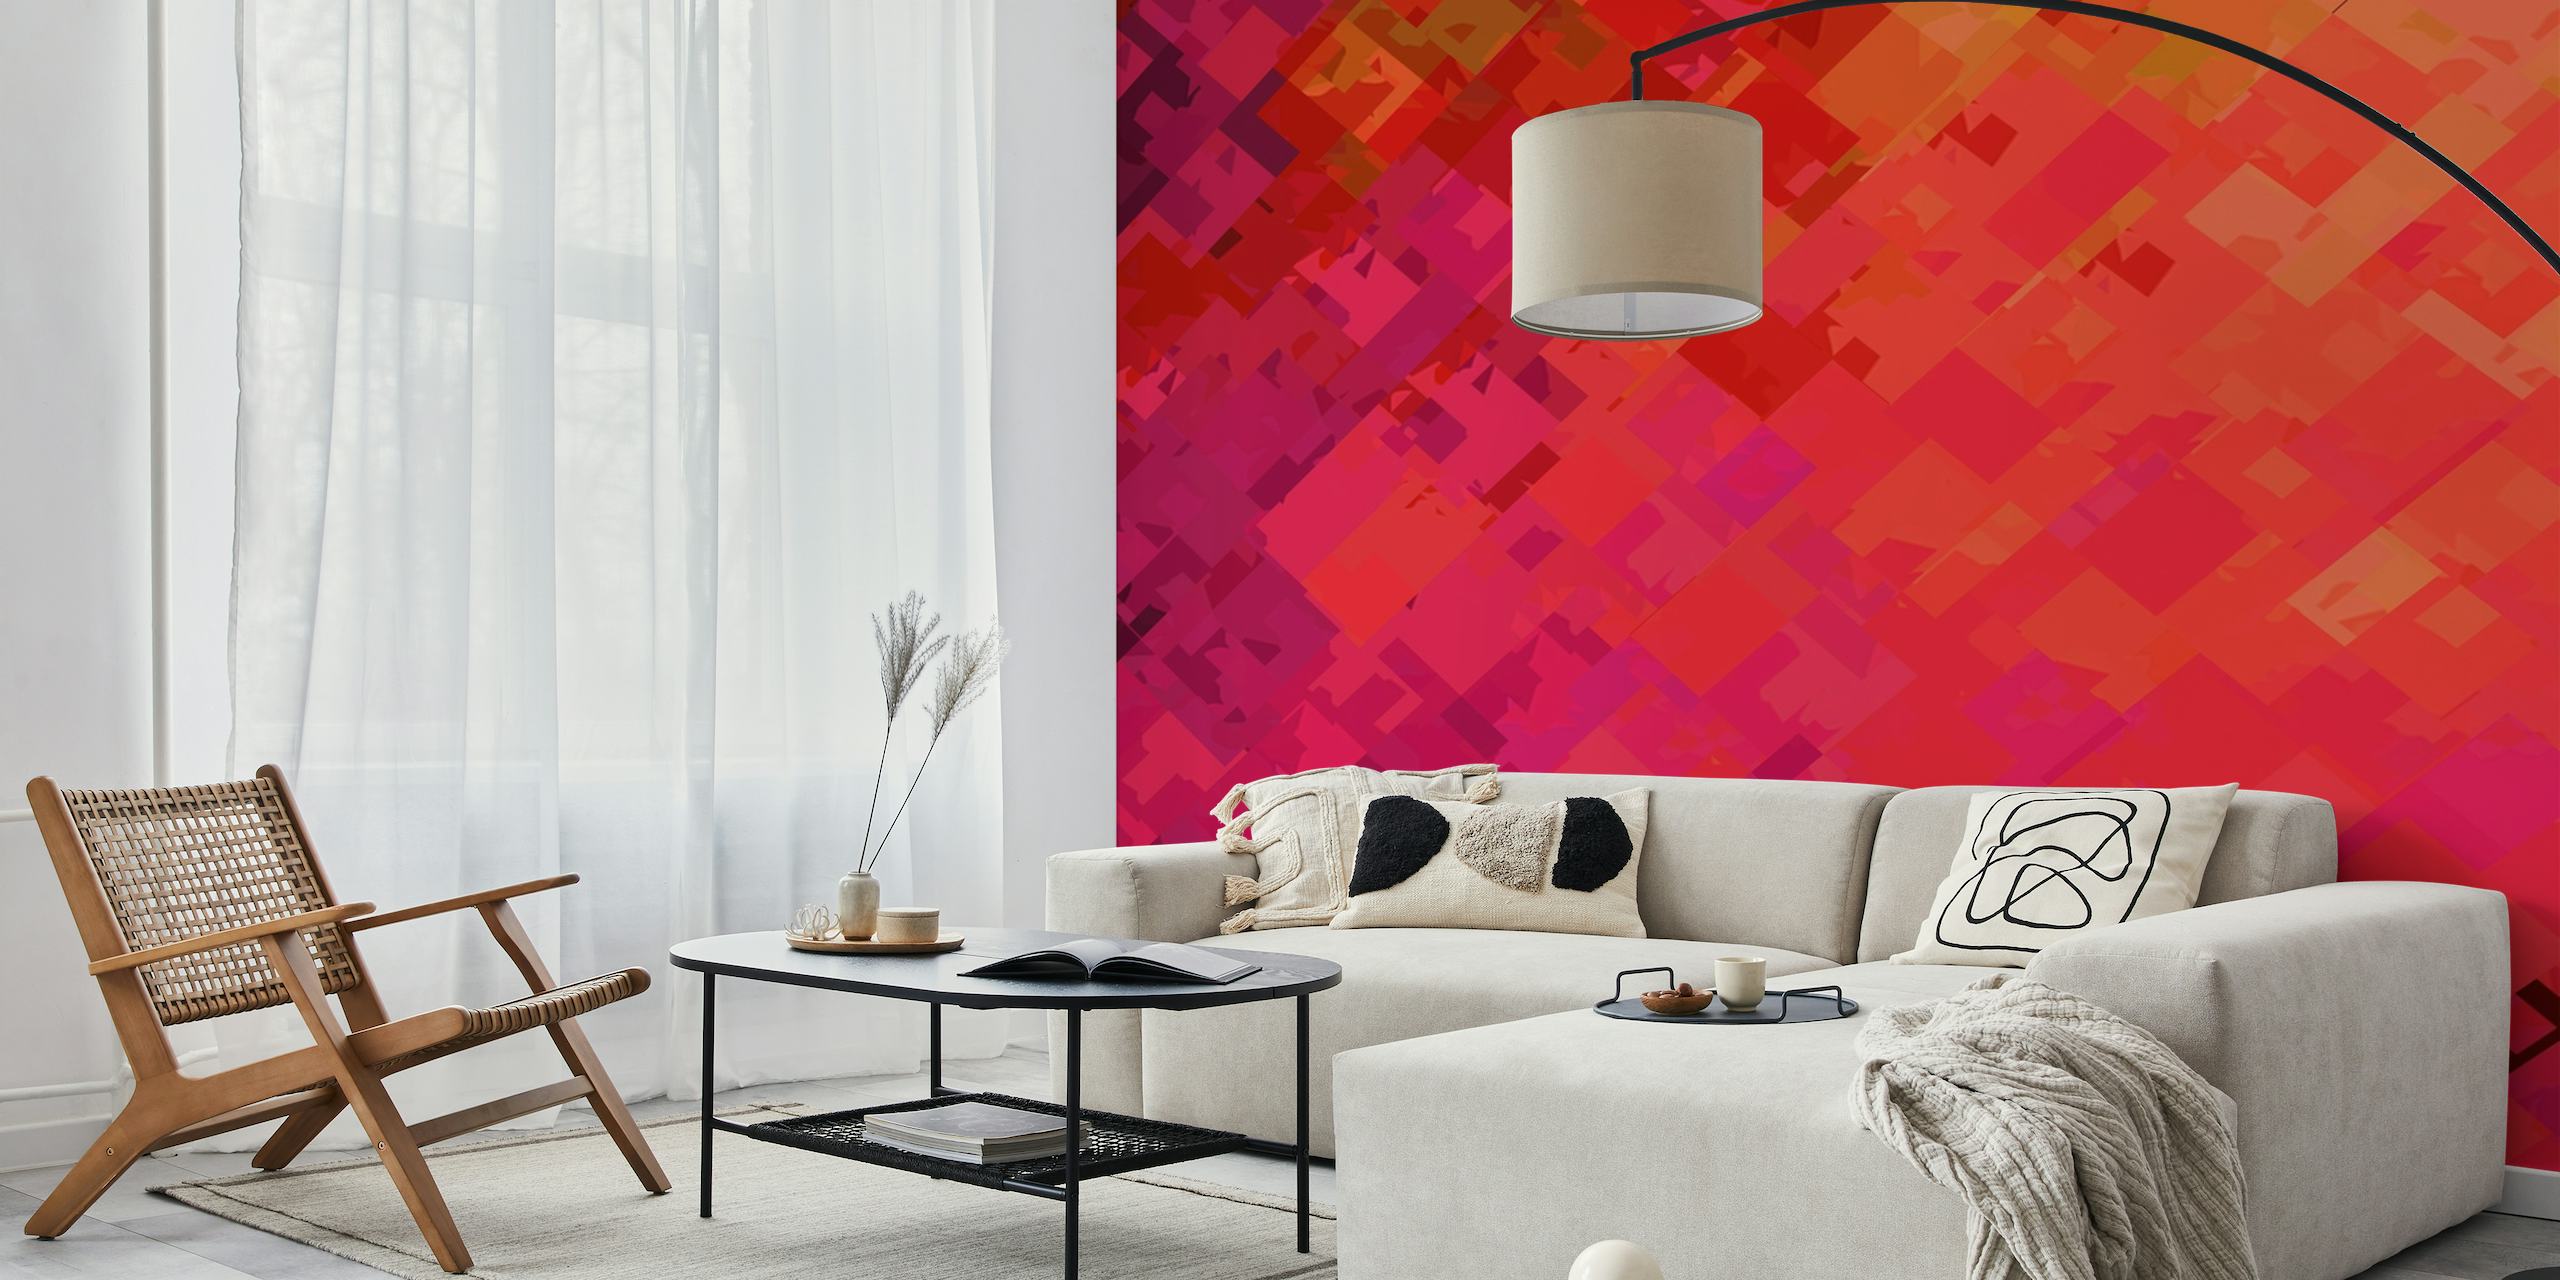 Abstract purple and orange geometric pixel pattern wall mural